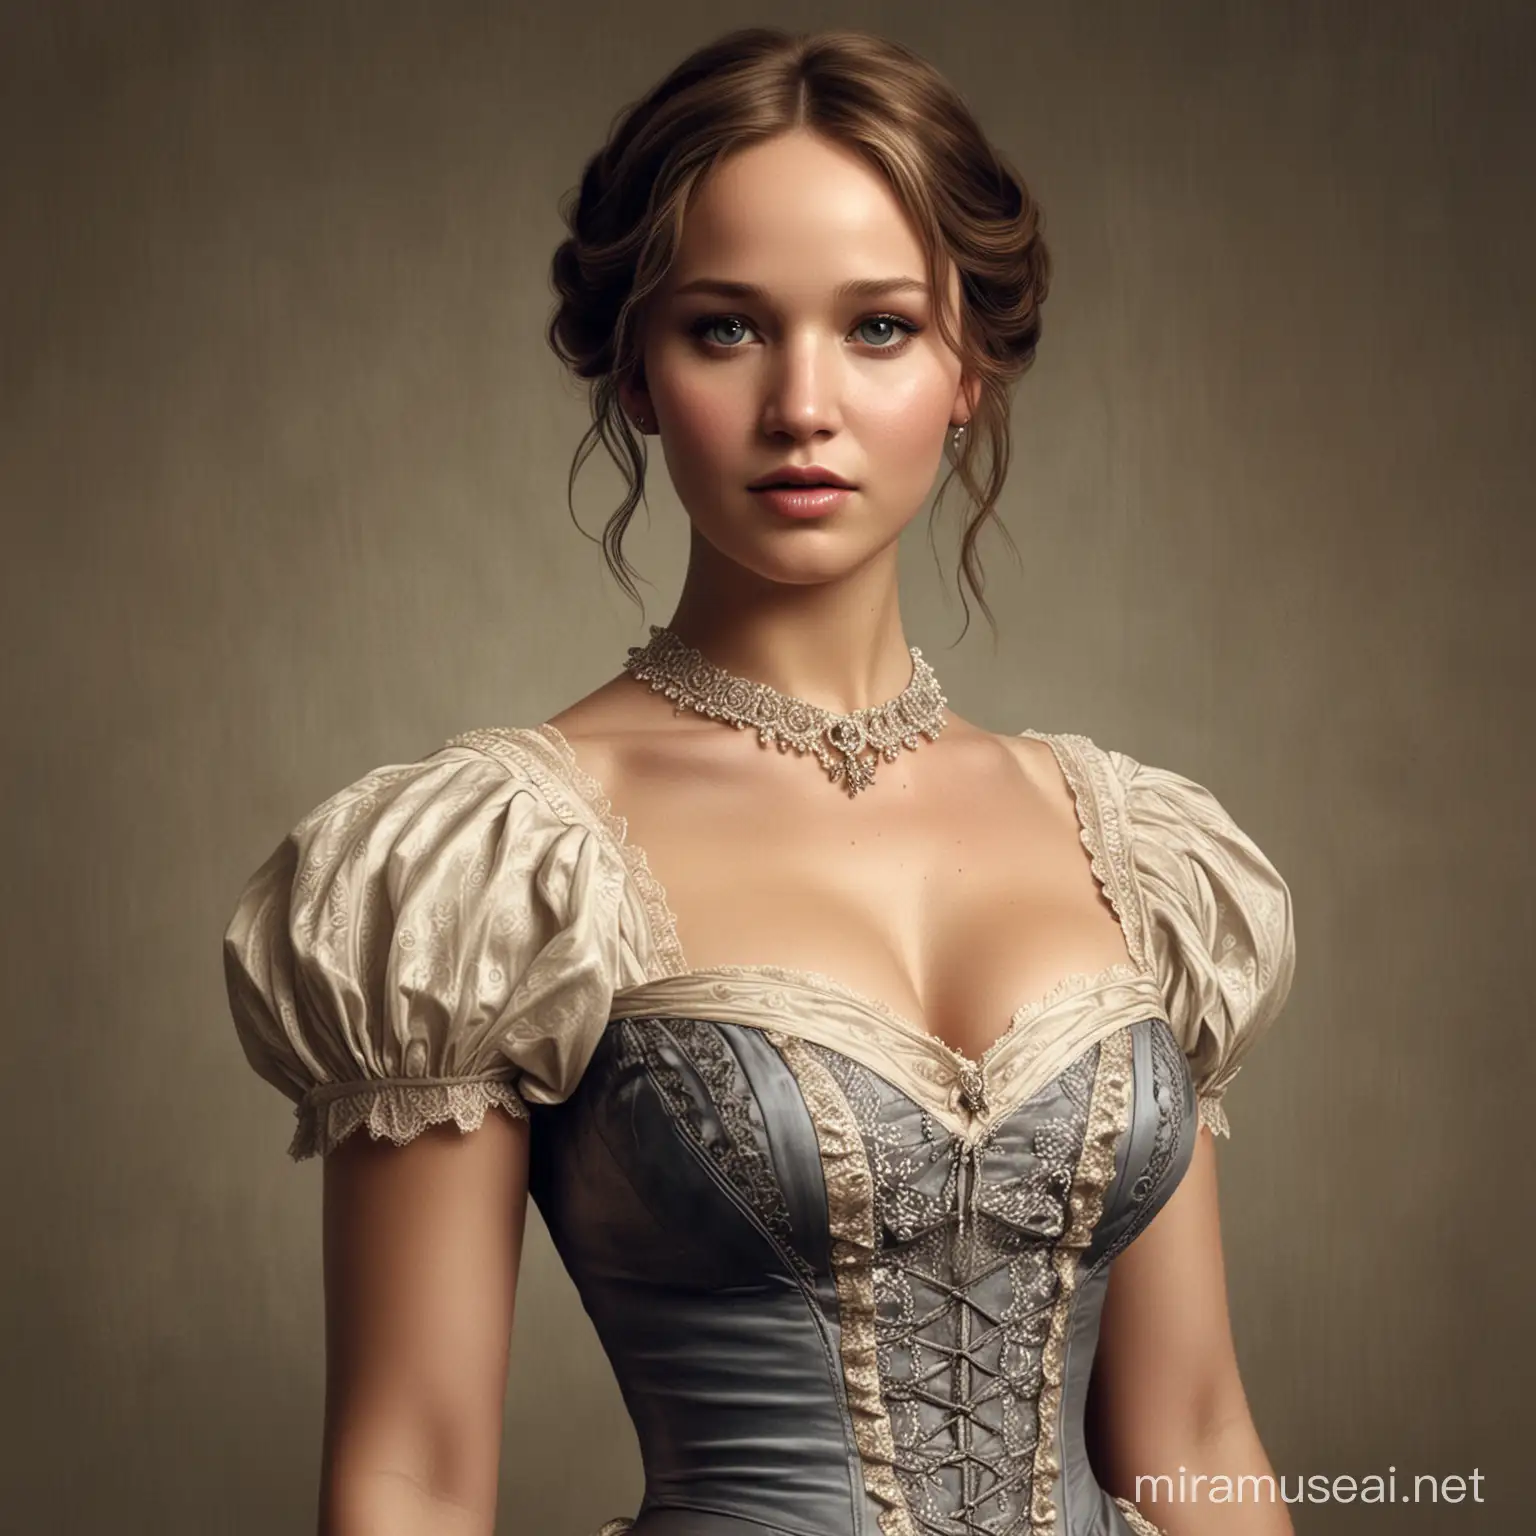 Photorealistic, Jennifer Lawrence, 20 years old, sexy Victorian era dress